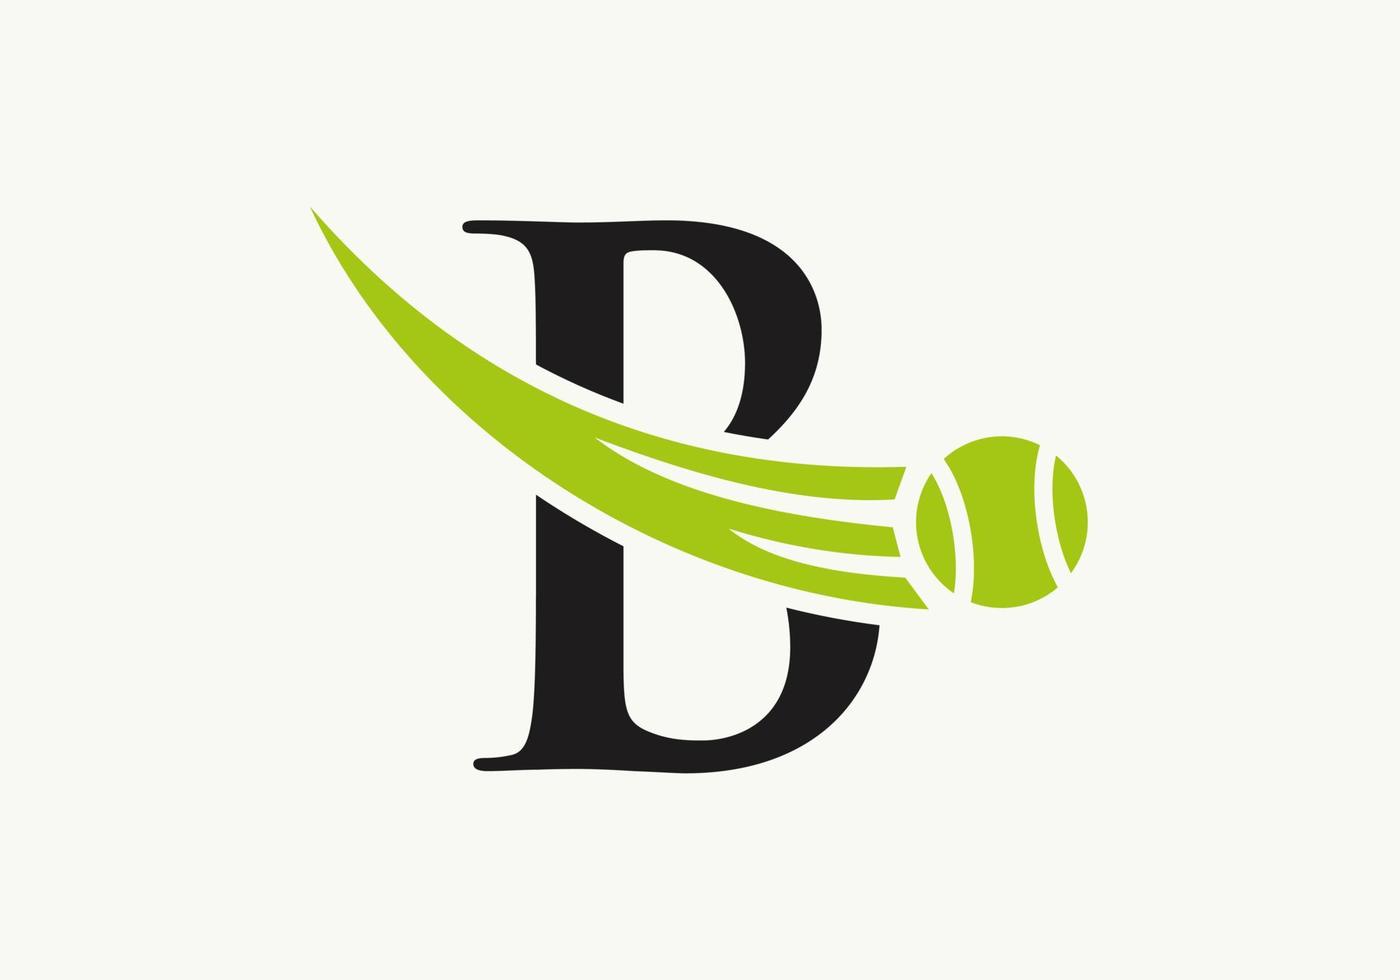 brief b tennis logo ontwerp sjabloon. tennis sport academie club logo vector